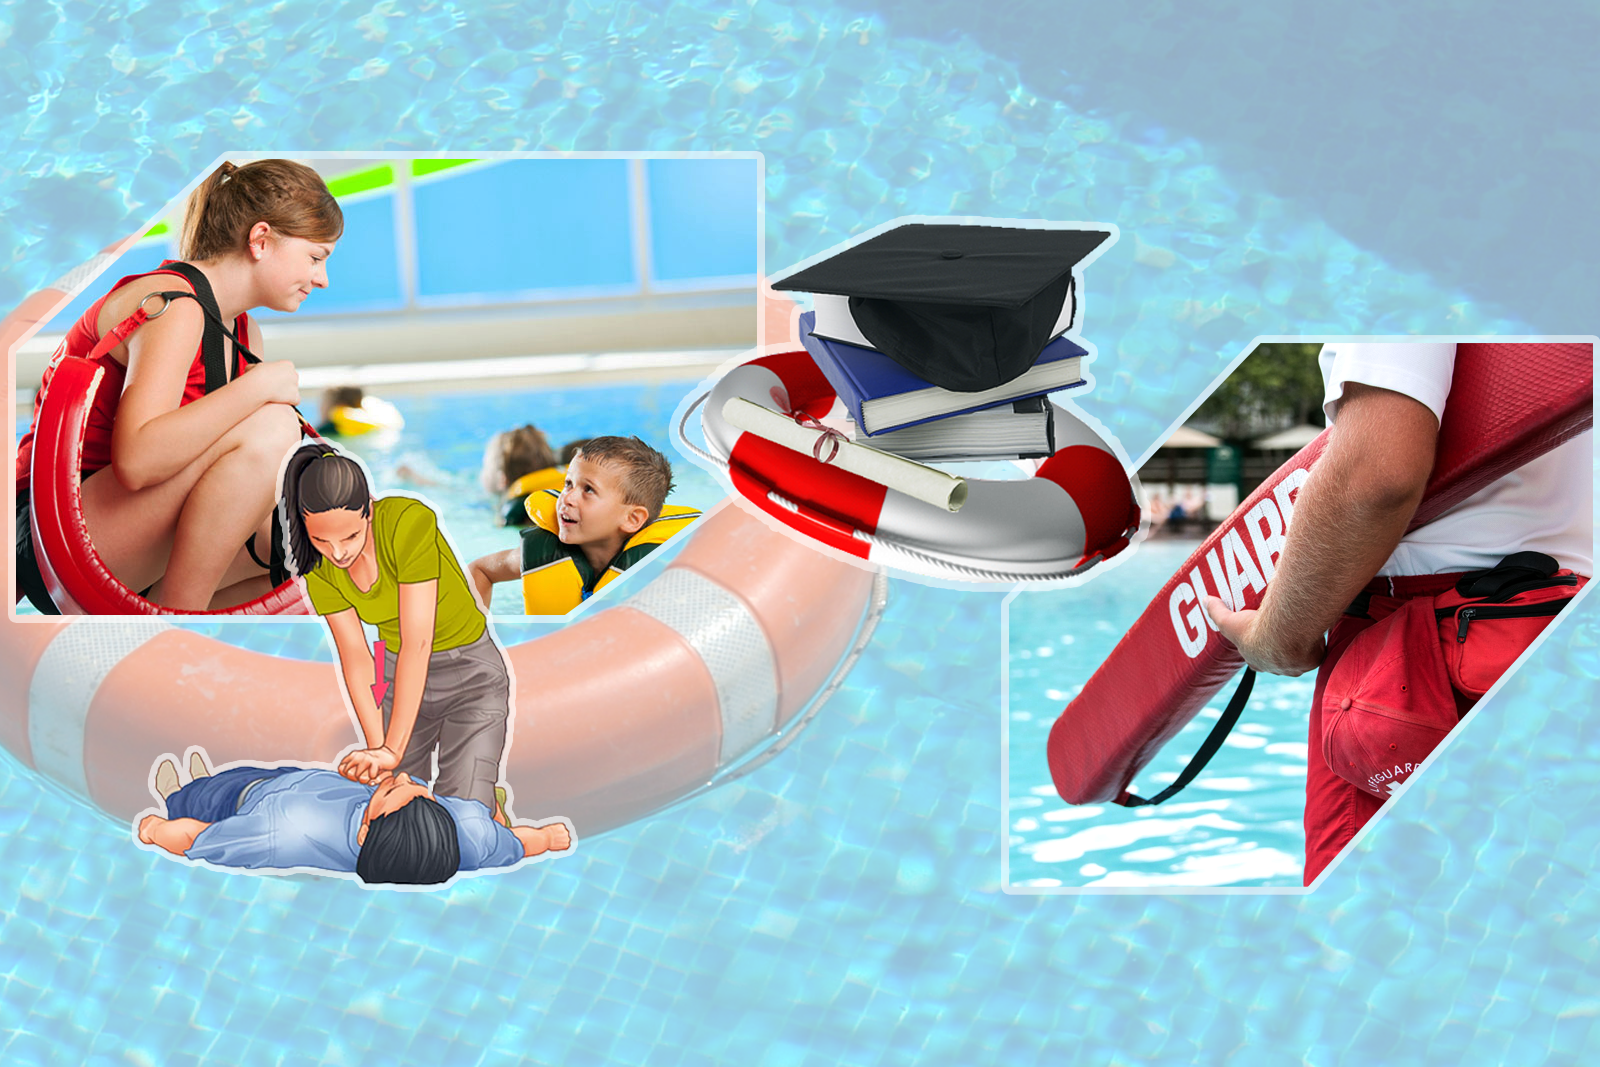 Lifeguarding... more than just a Summer job!